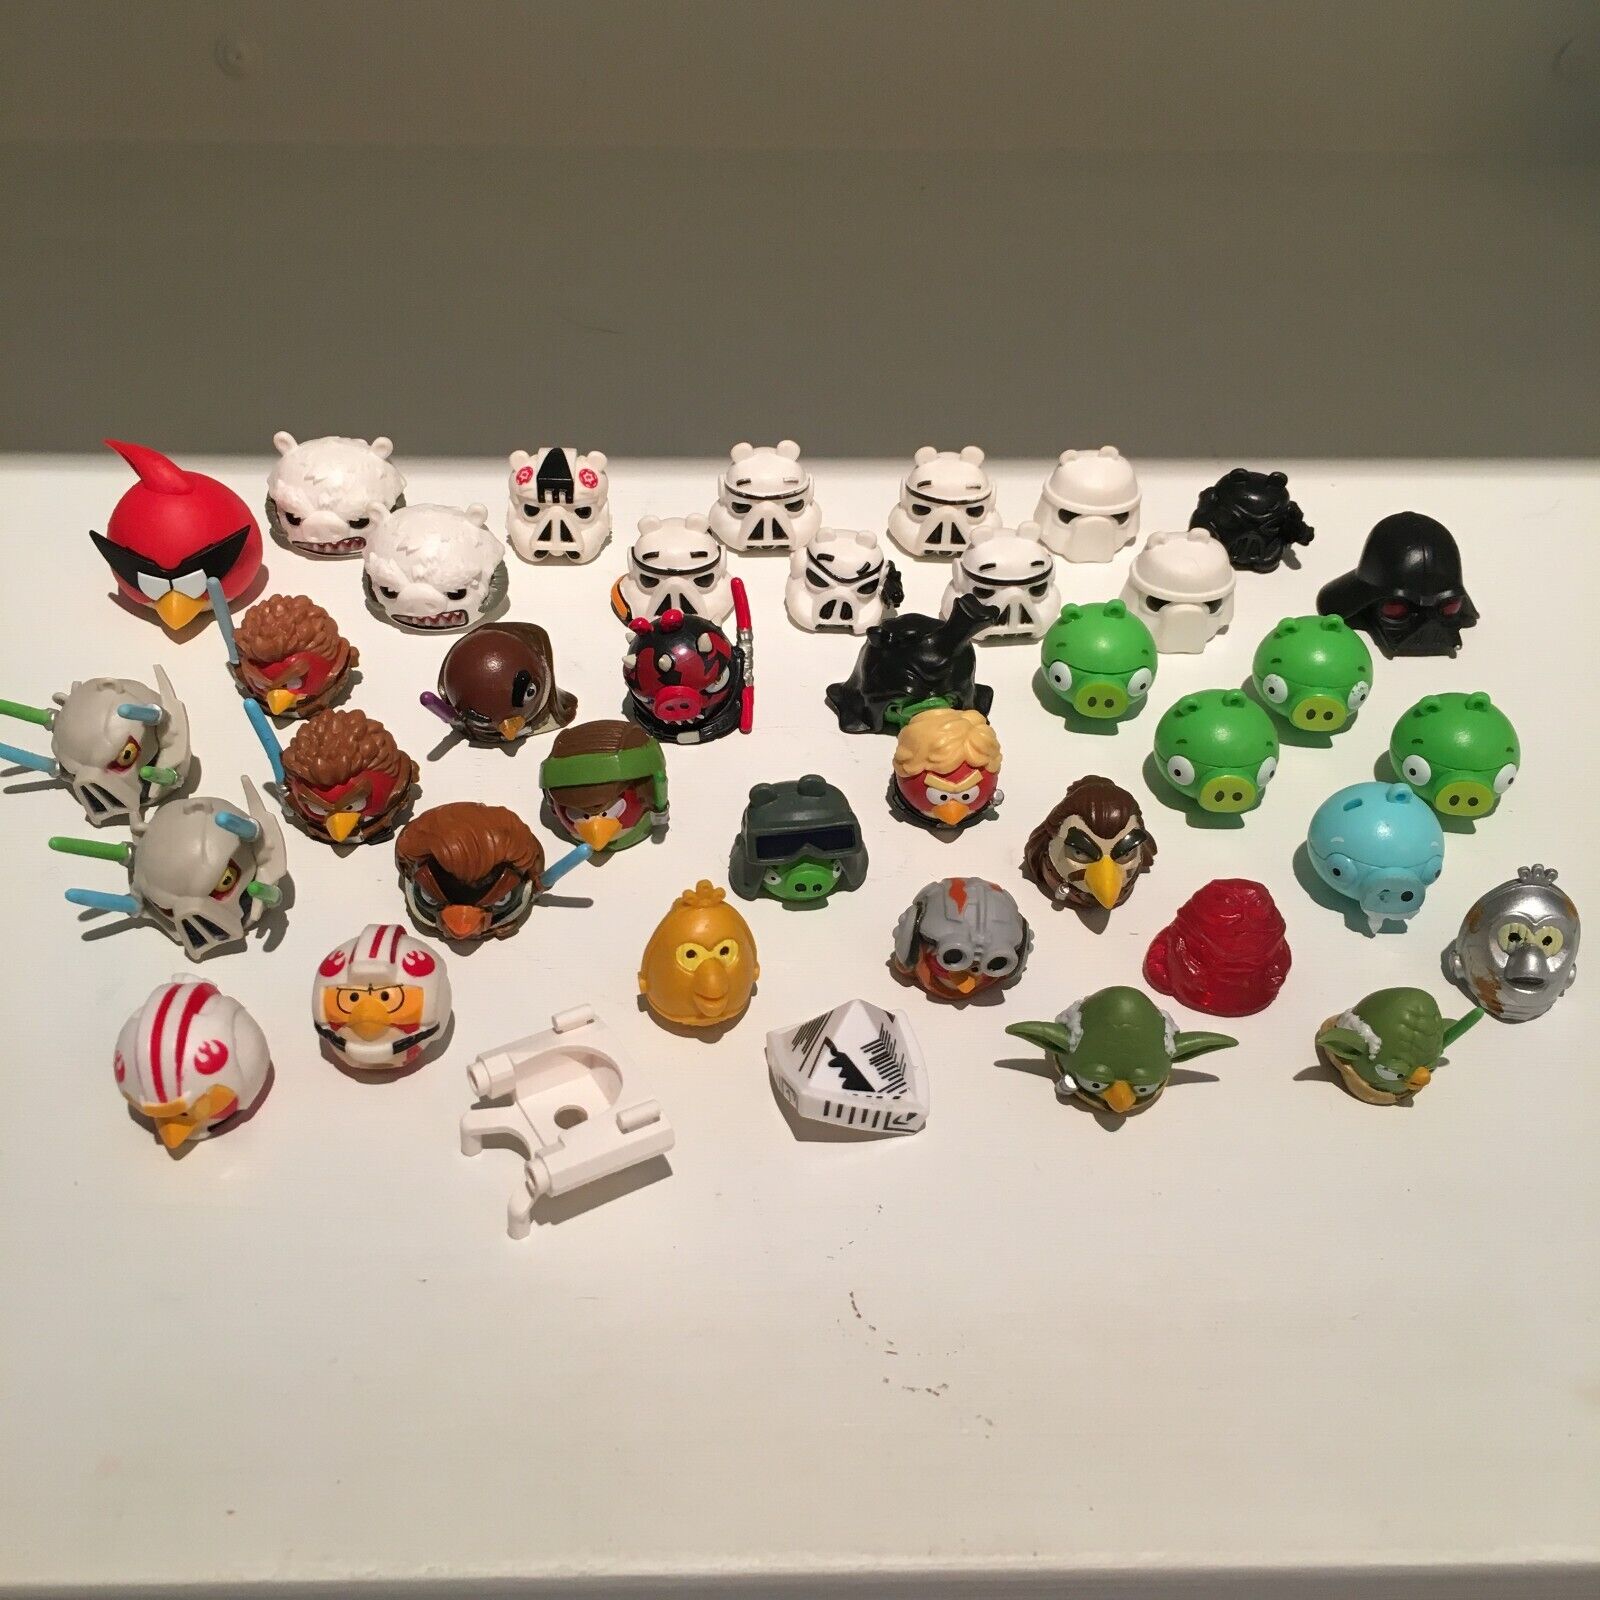 40 Pc Lot Angry Birds Star Wars Telepods Jenka Mini Figures Characters Mixed Lot